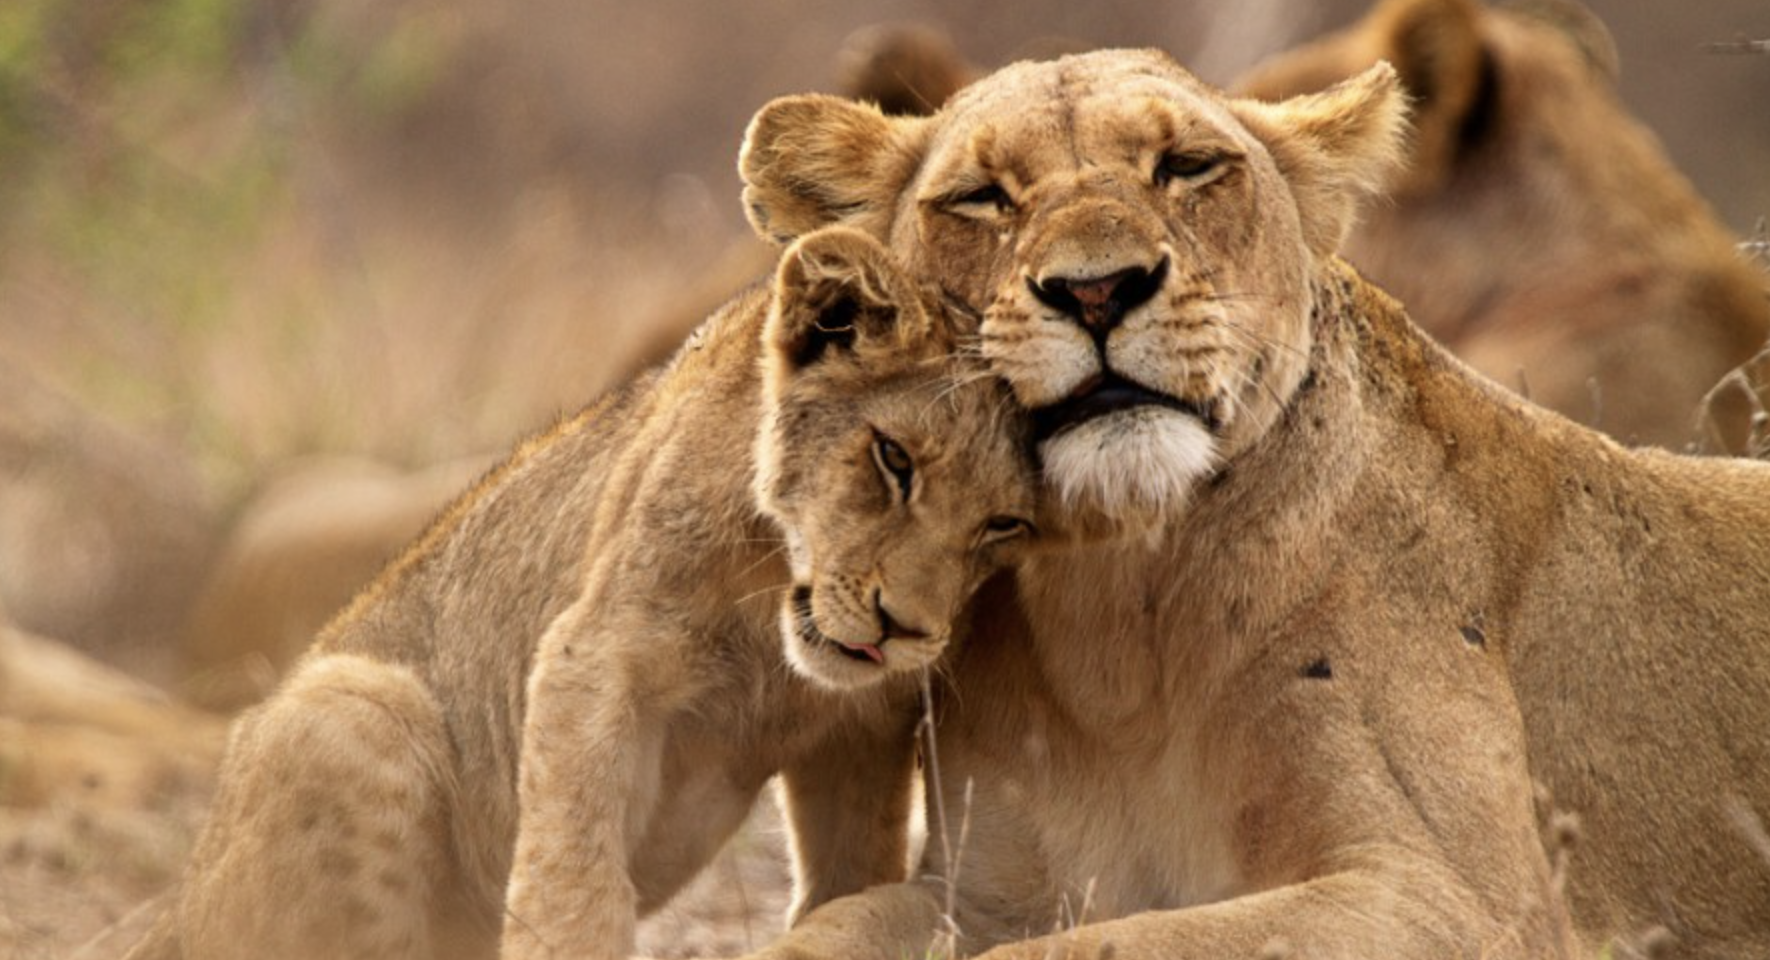 a lion cub rubbing its head on its mom